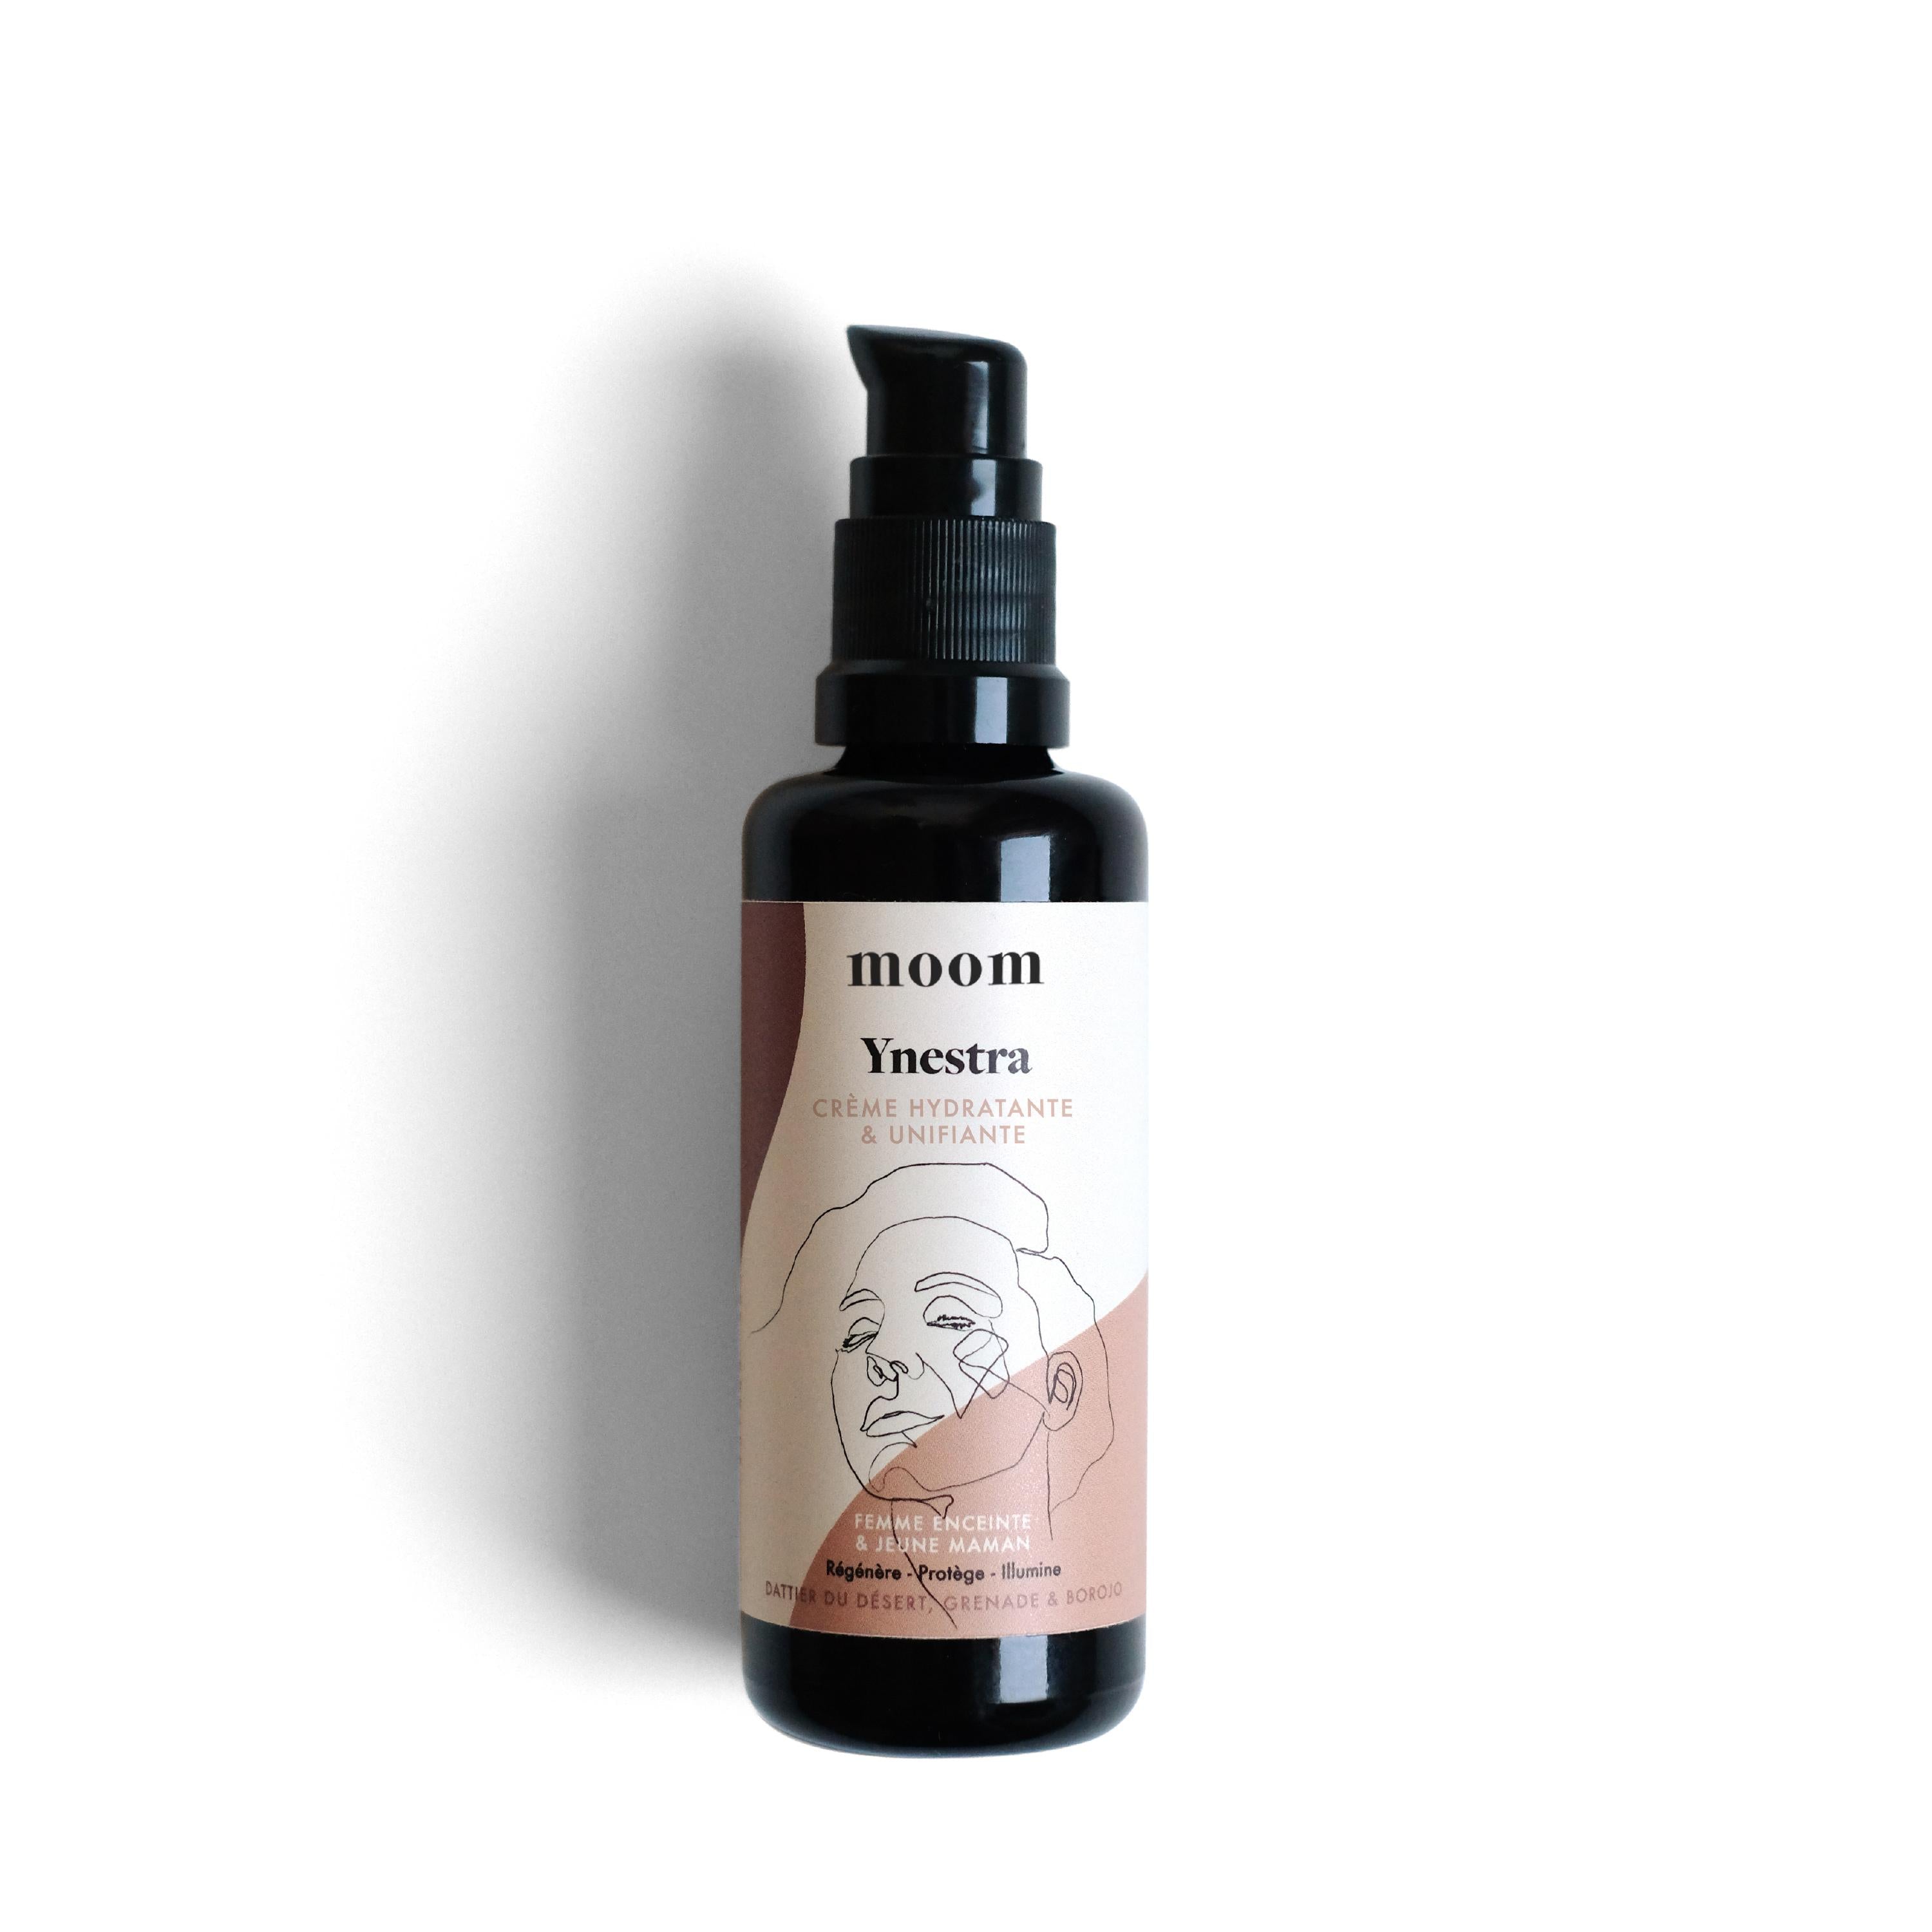 Moom Ynestra - Organic moisturizing and unifying cream - www.Hudonline.no 